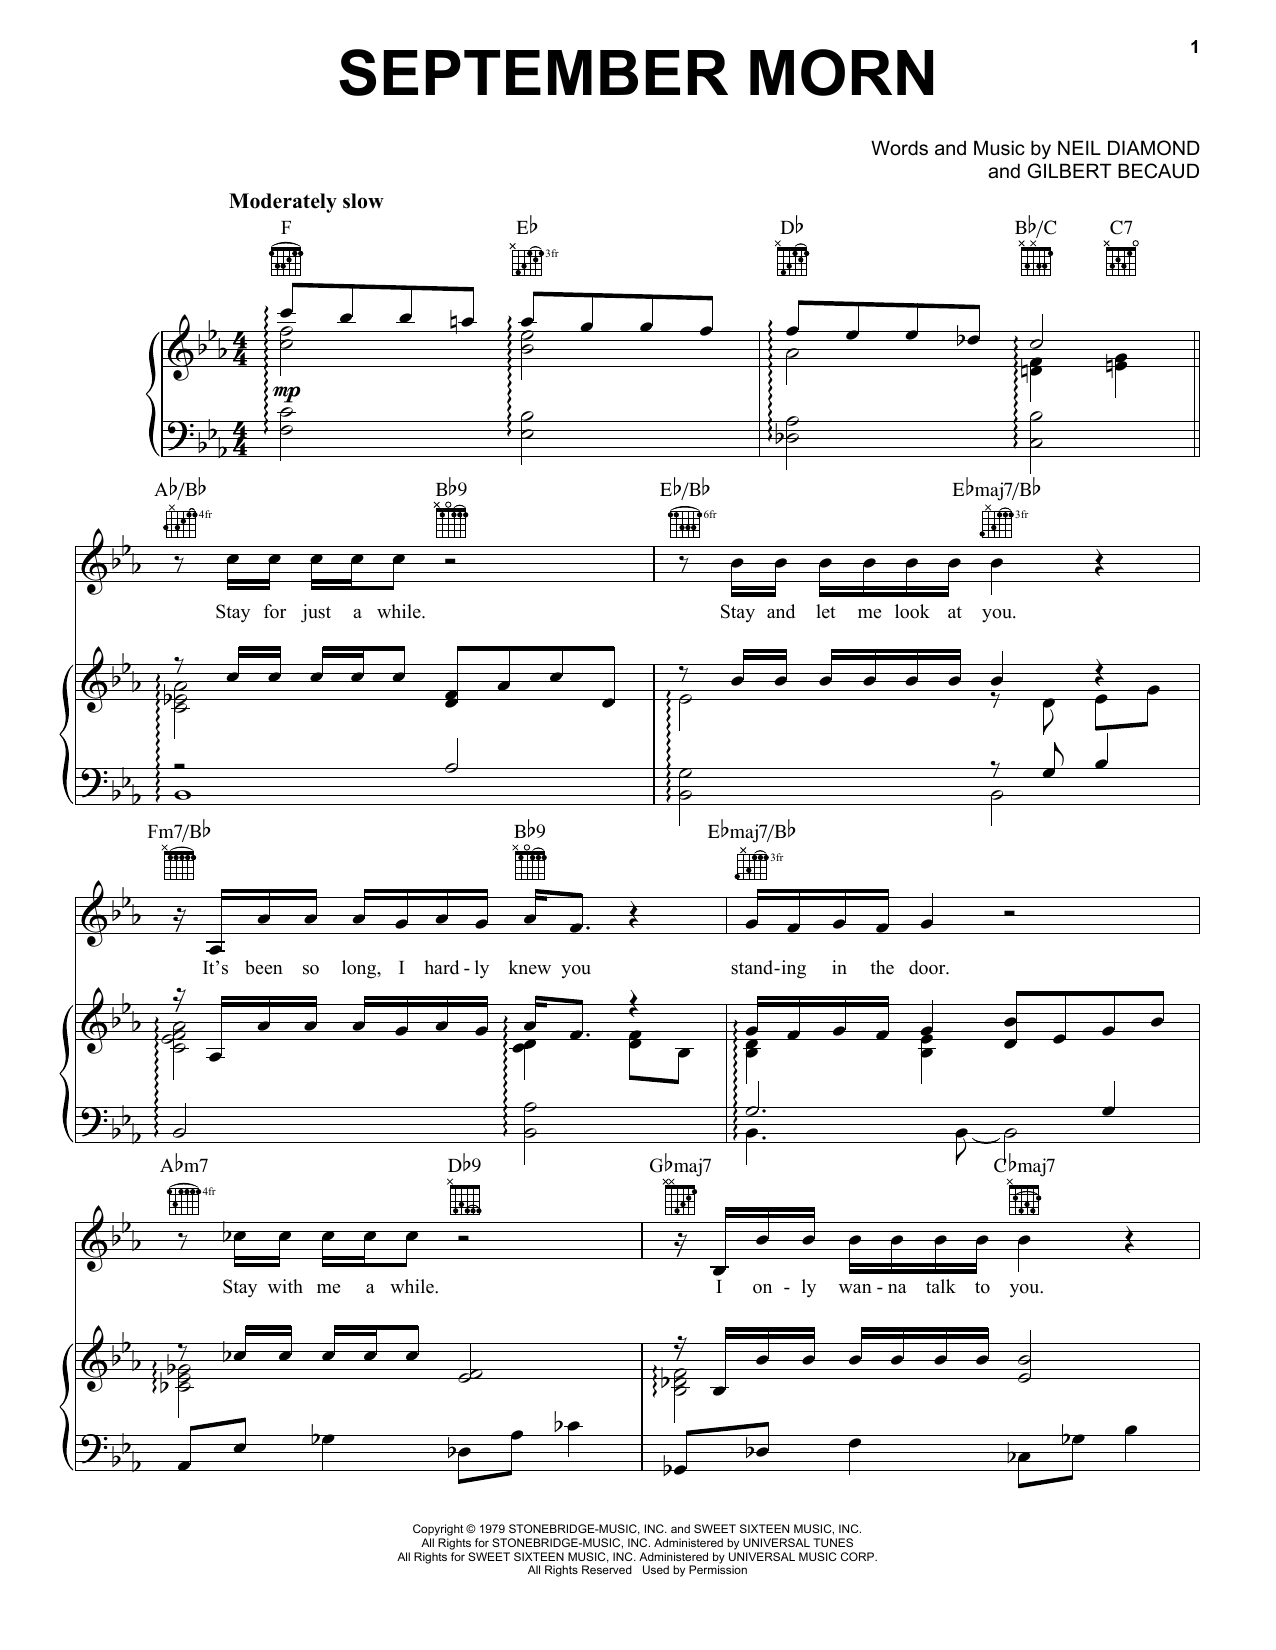 Neil Diamond September Morn Sheet Music Notes & Chords for Ukulele - Download or Print PDF